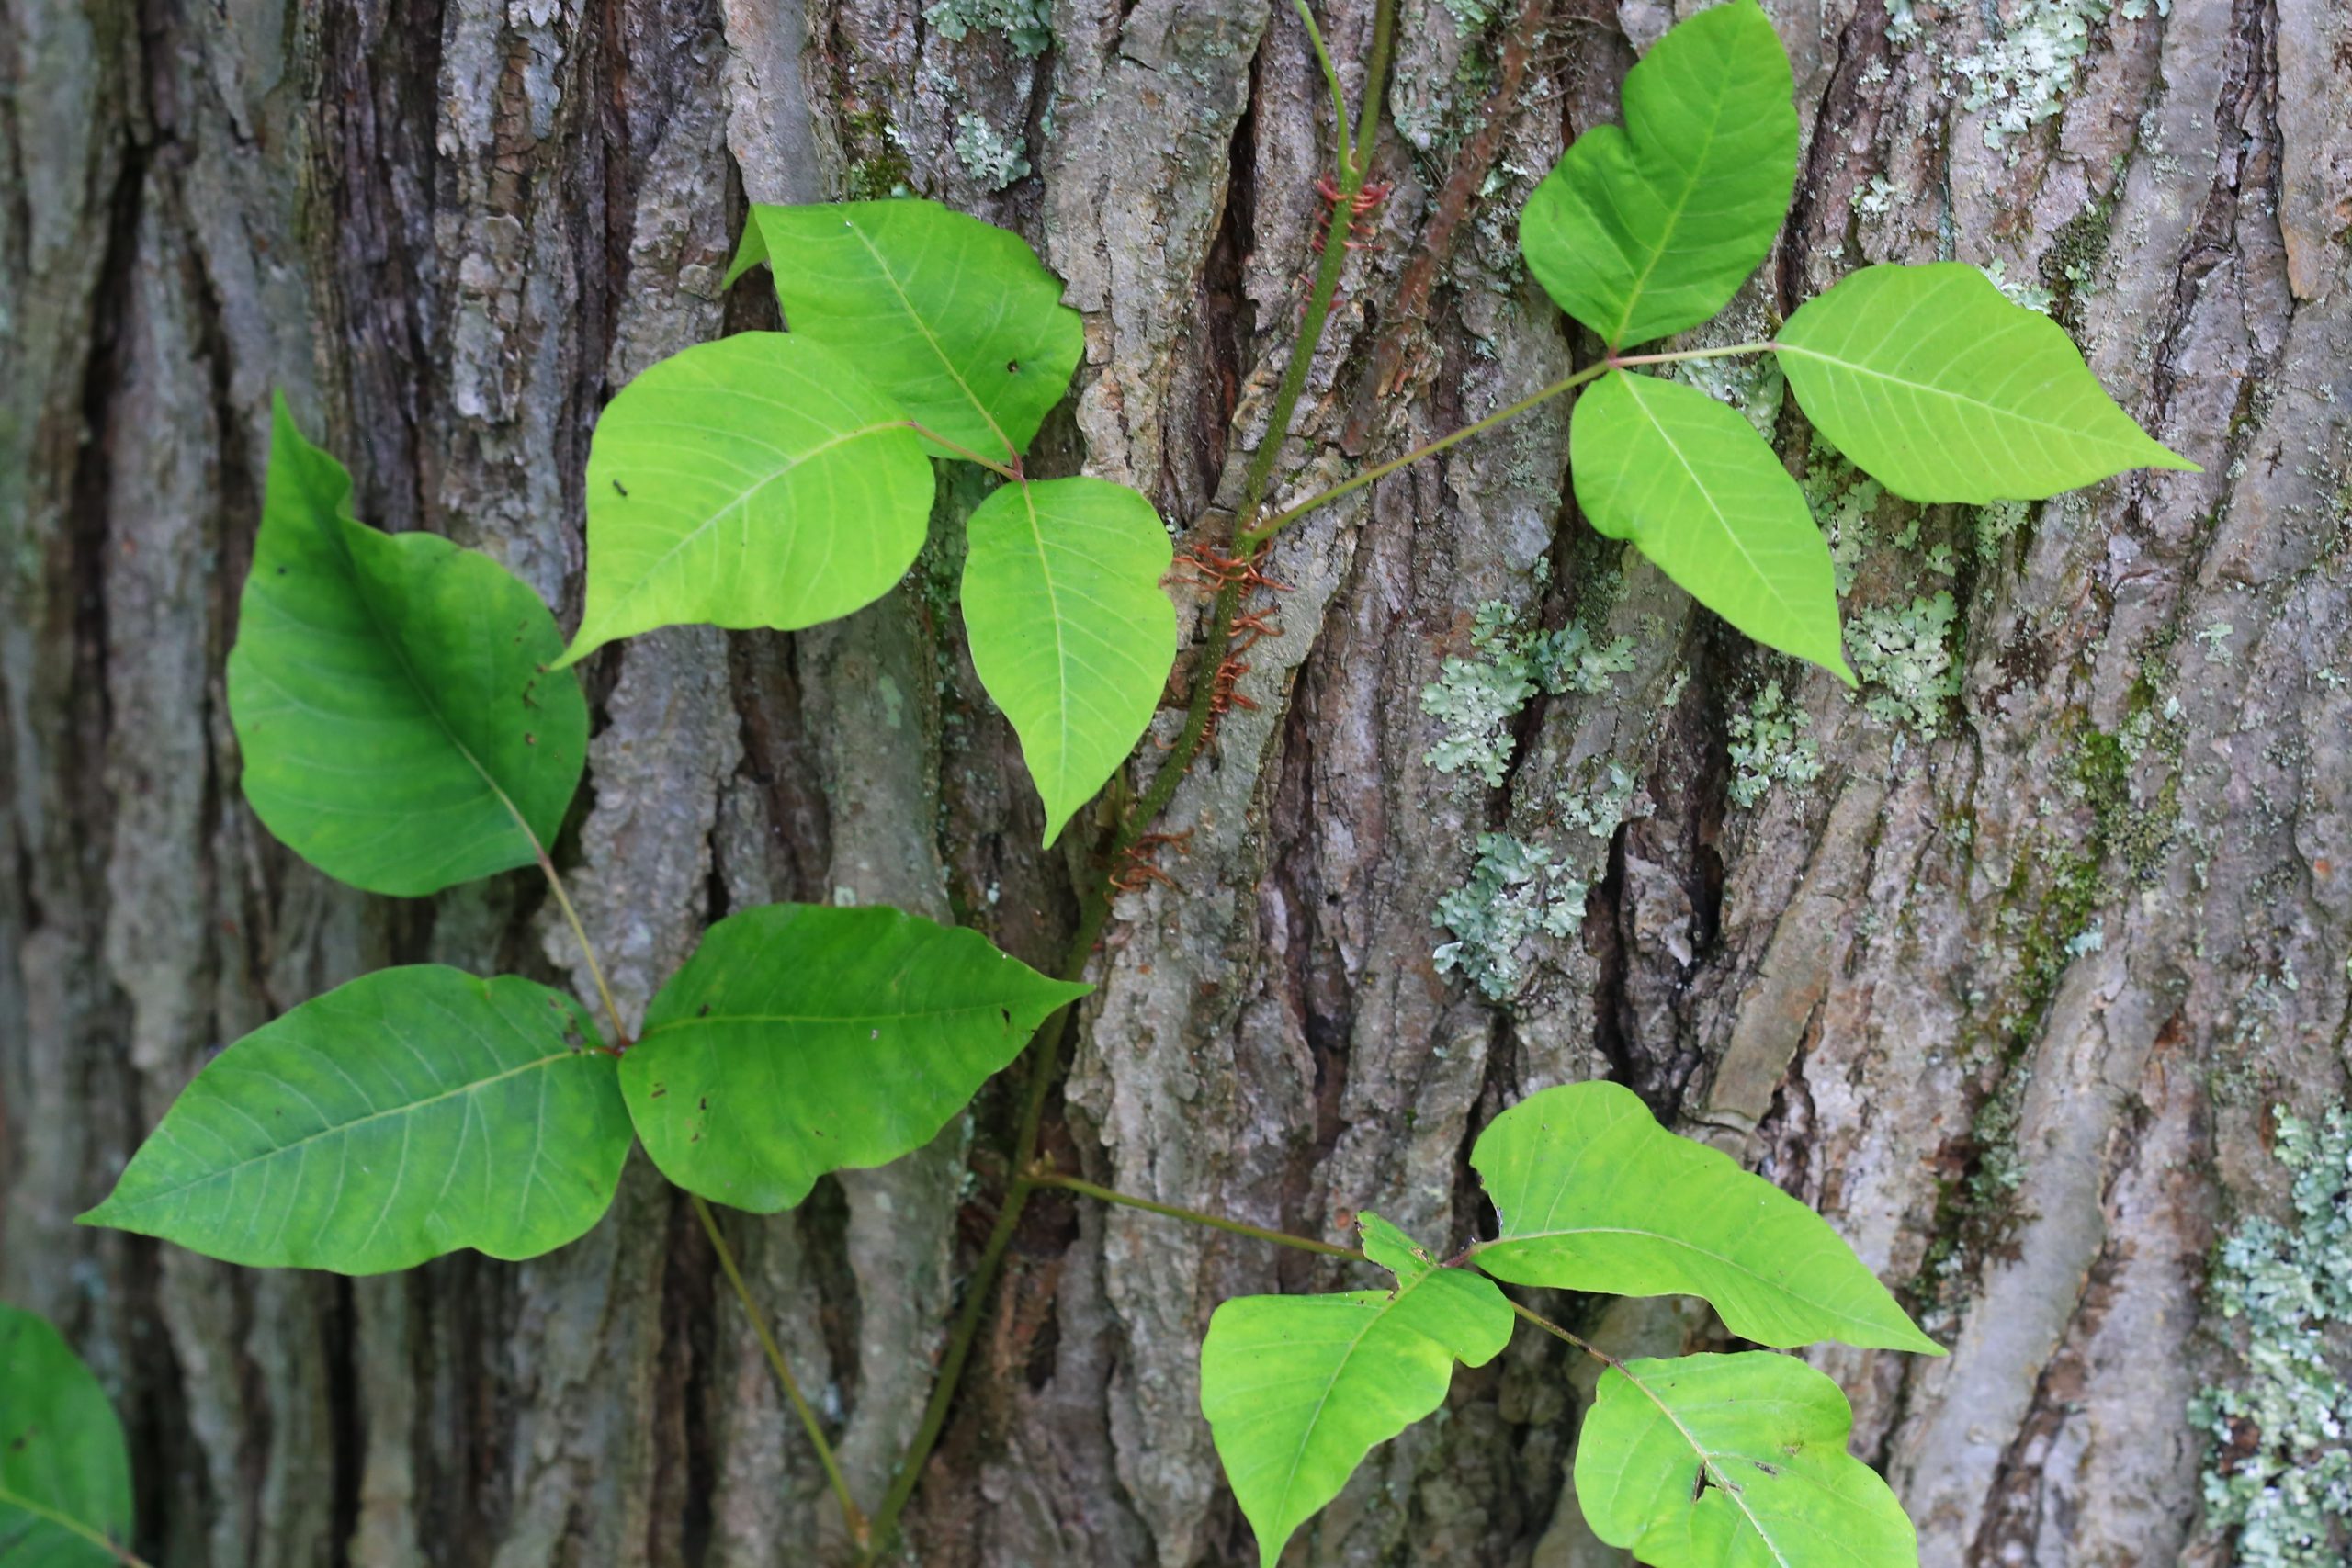 Poison ivy on tree